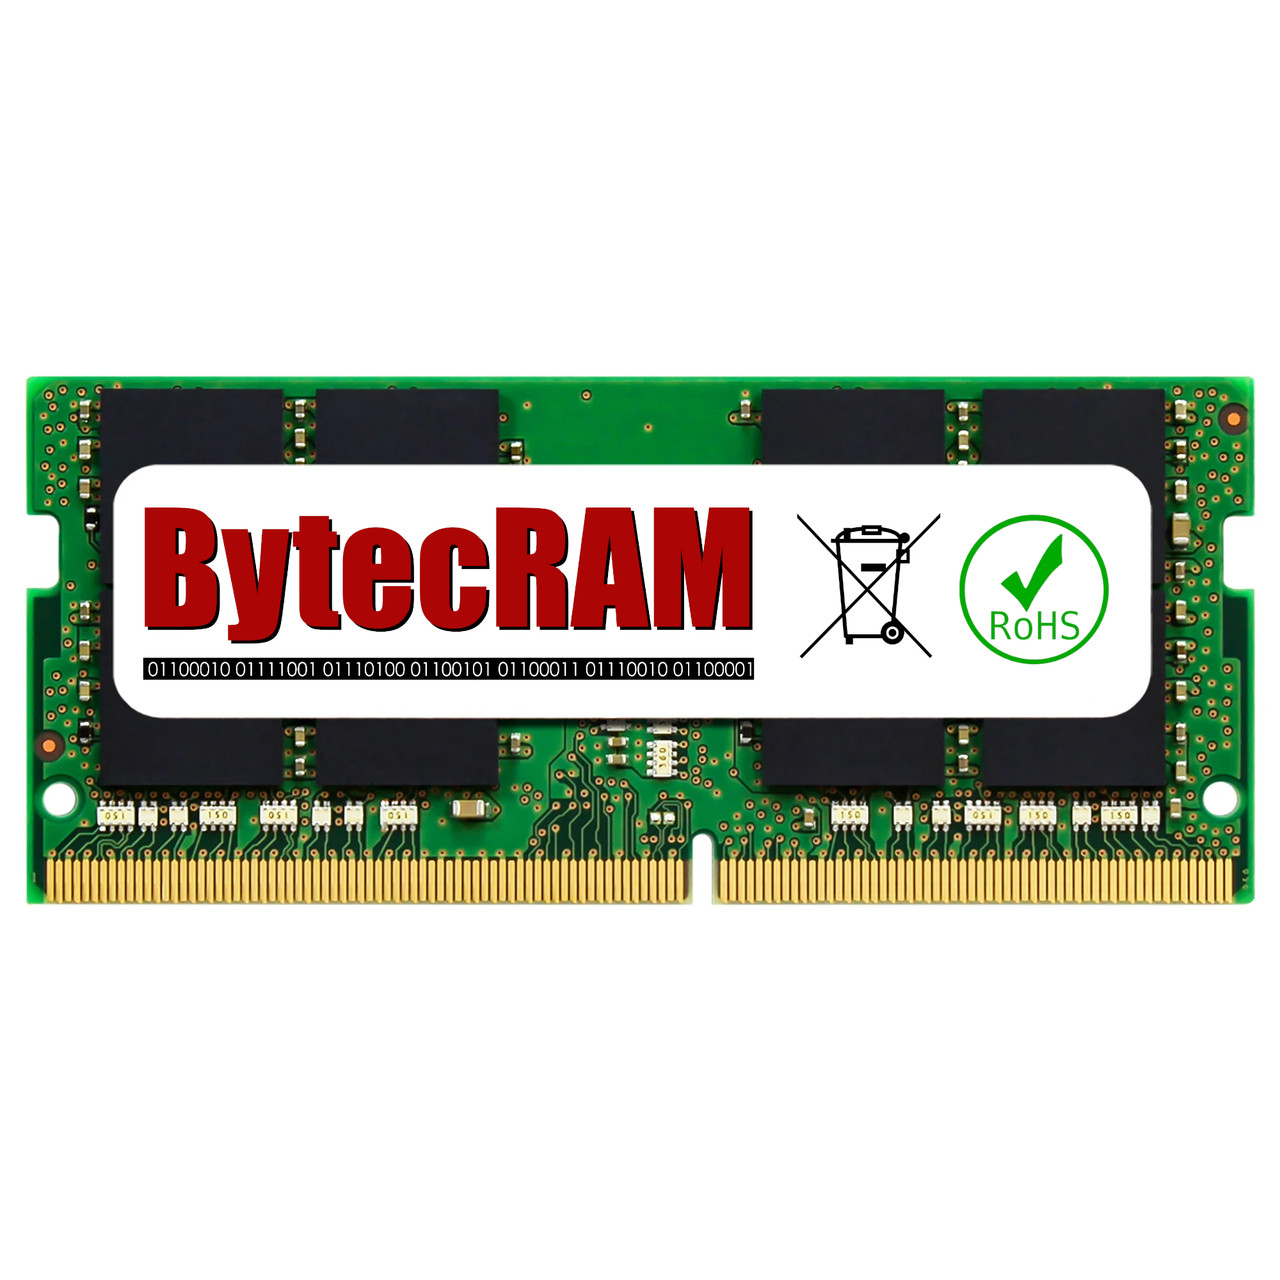 eBay*8GB 260-pin BytecRAM DDR4-2666 PC4-21300 Sodimm (1Rx8) Memory